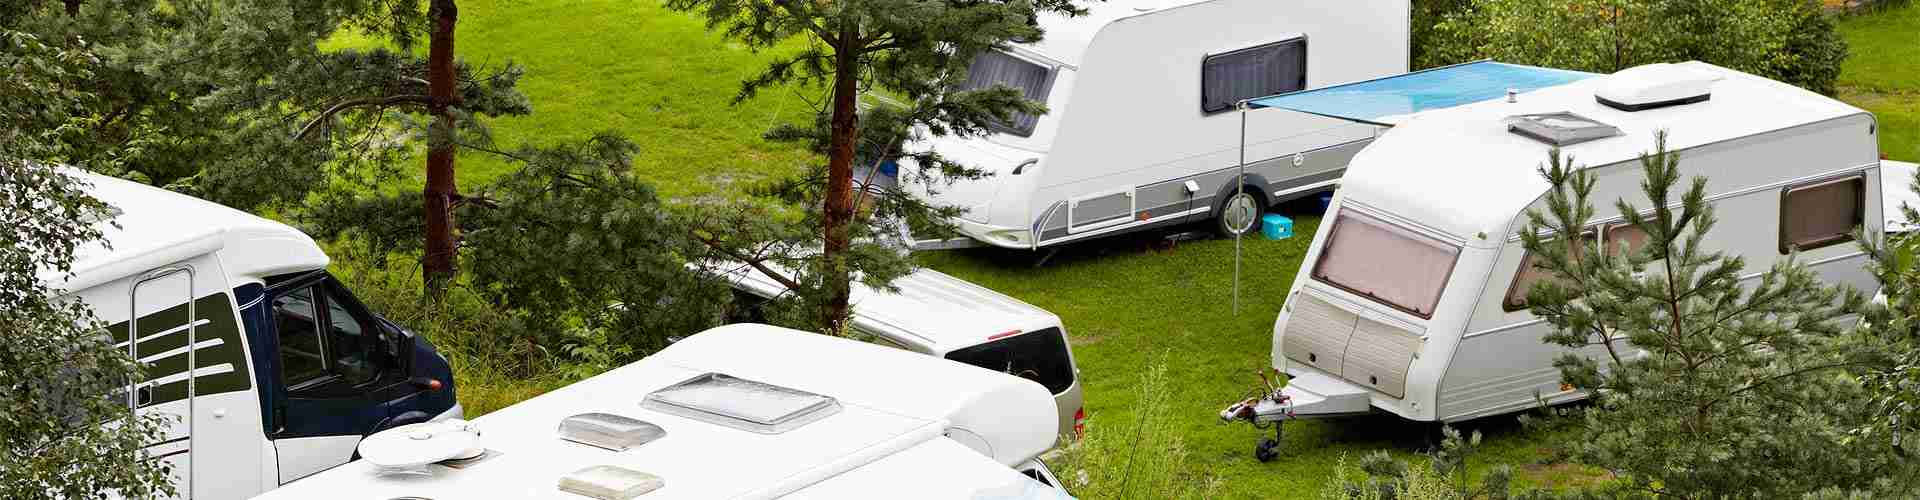 Campings y bungalows en el País Vasco